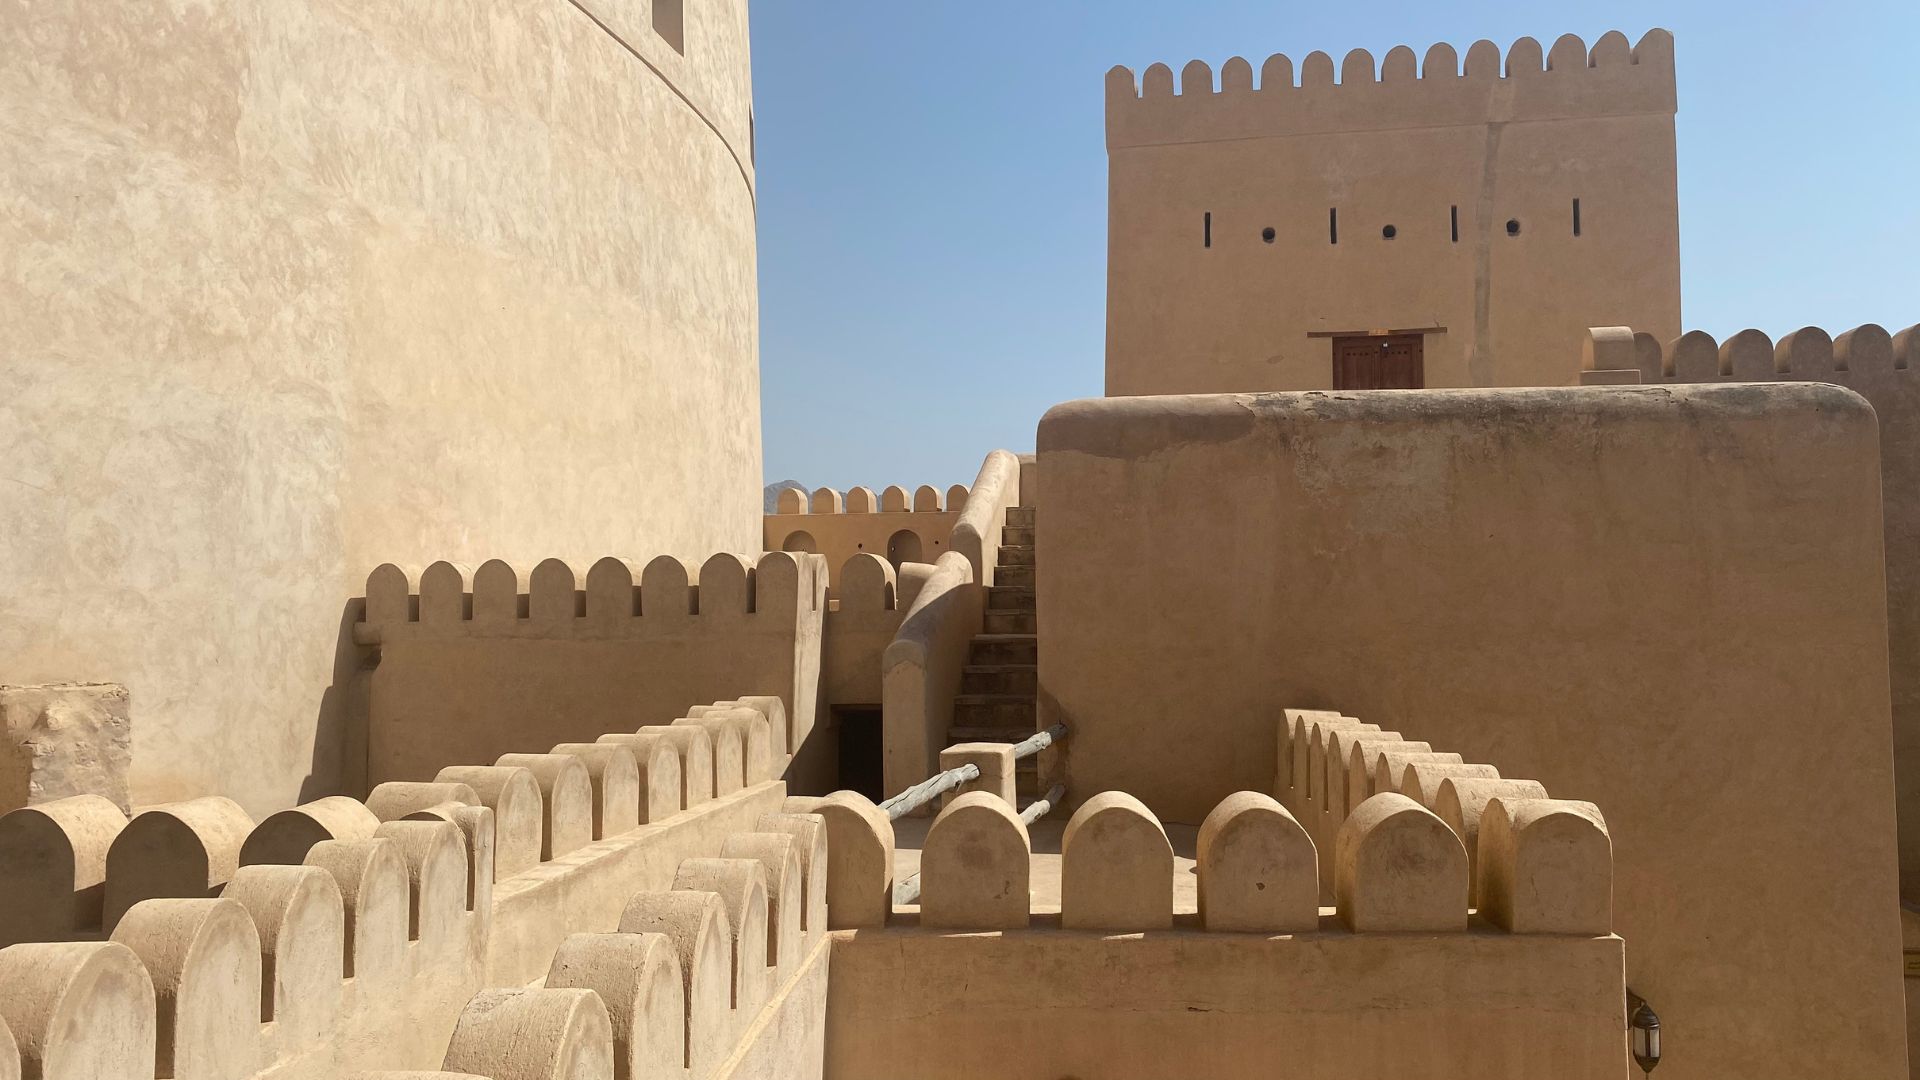 A shot showing Nizwa fort in Oman